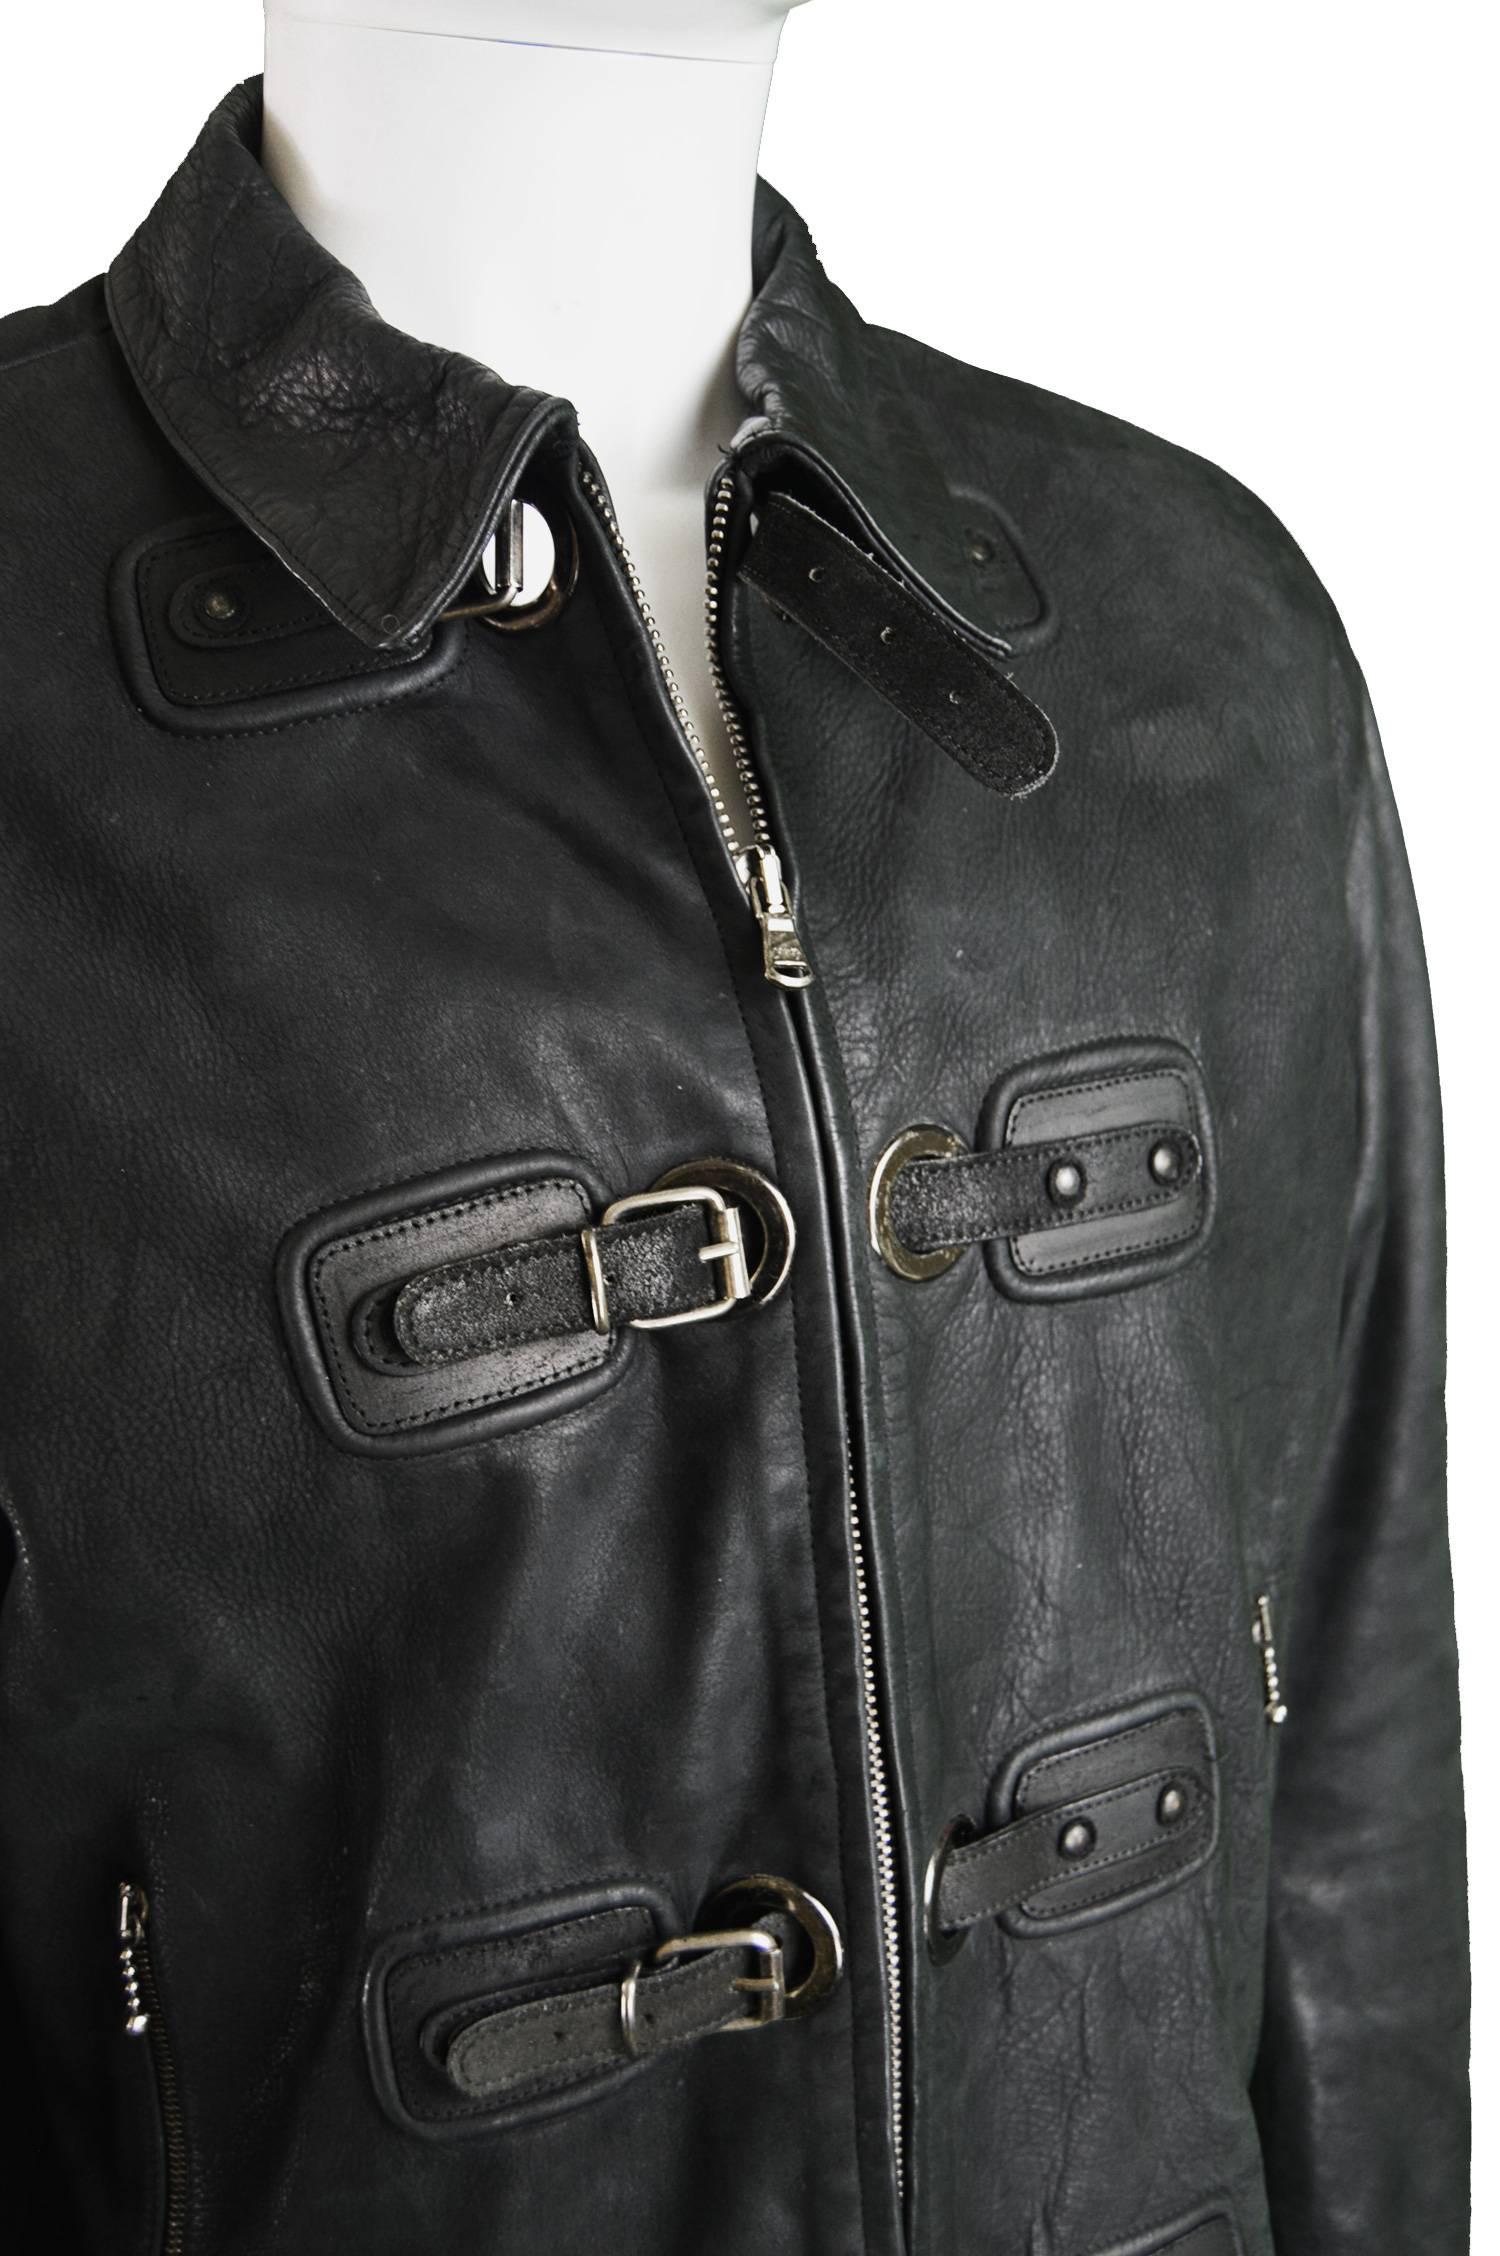 Calugi E Giannelli Men's Black Buckle Detail Italian Leather Jacket ...